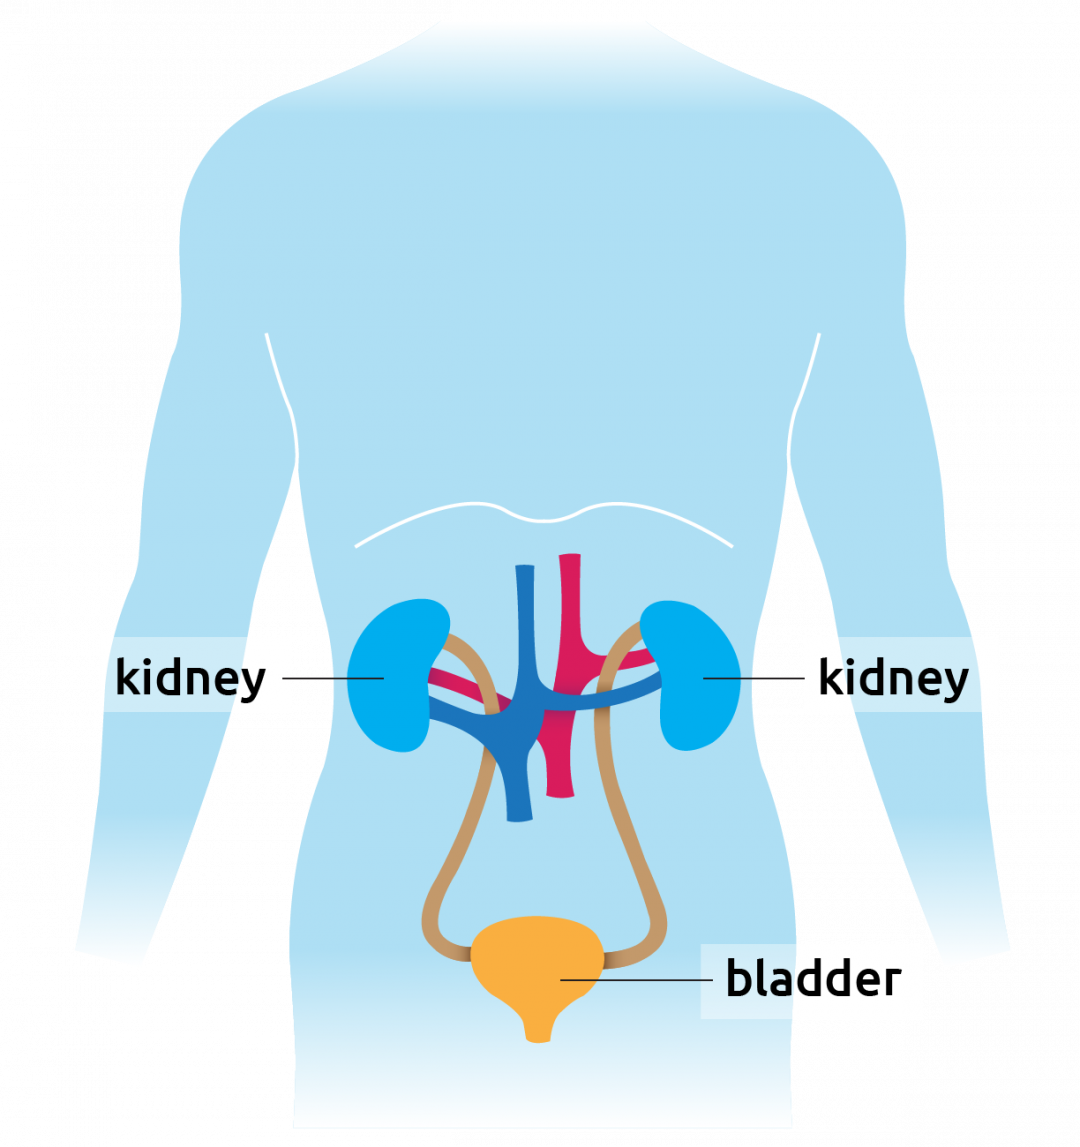 Human Body Organs Diagram Kidneys - Kidney Anatomy Human Female Cancer ...